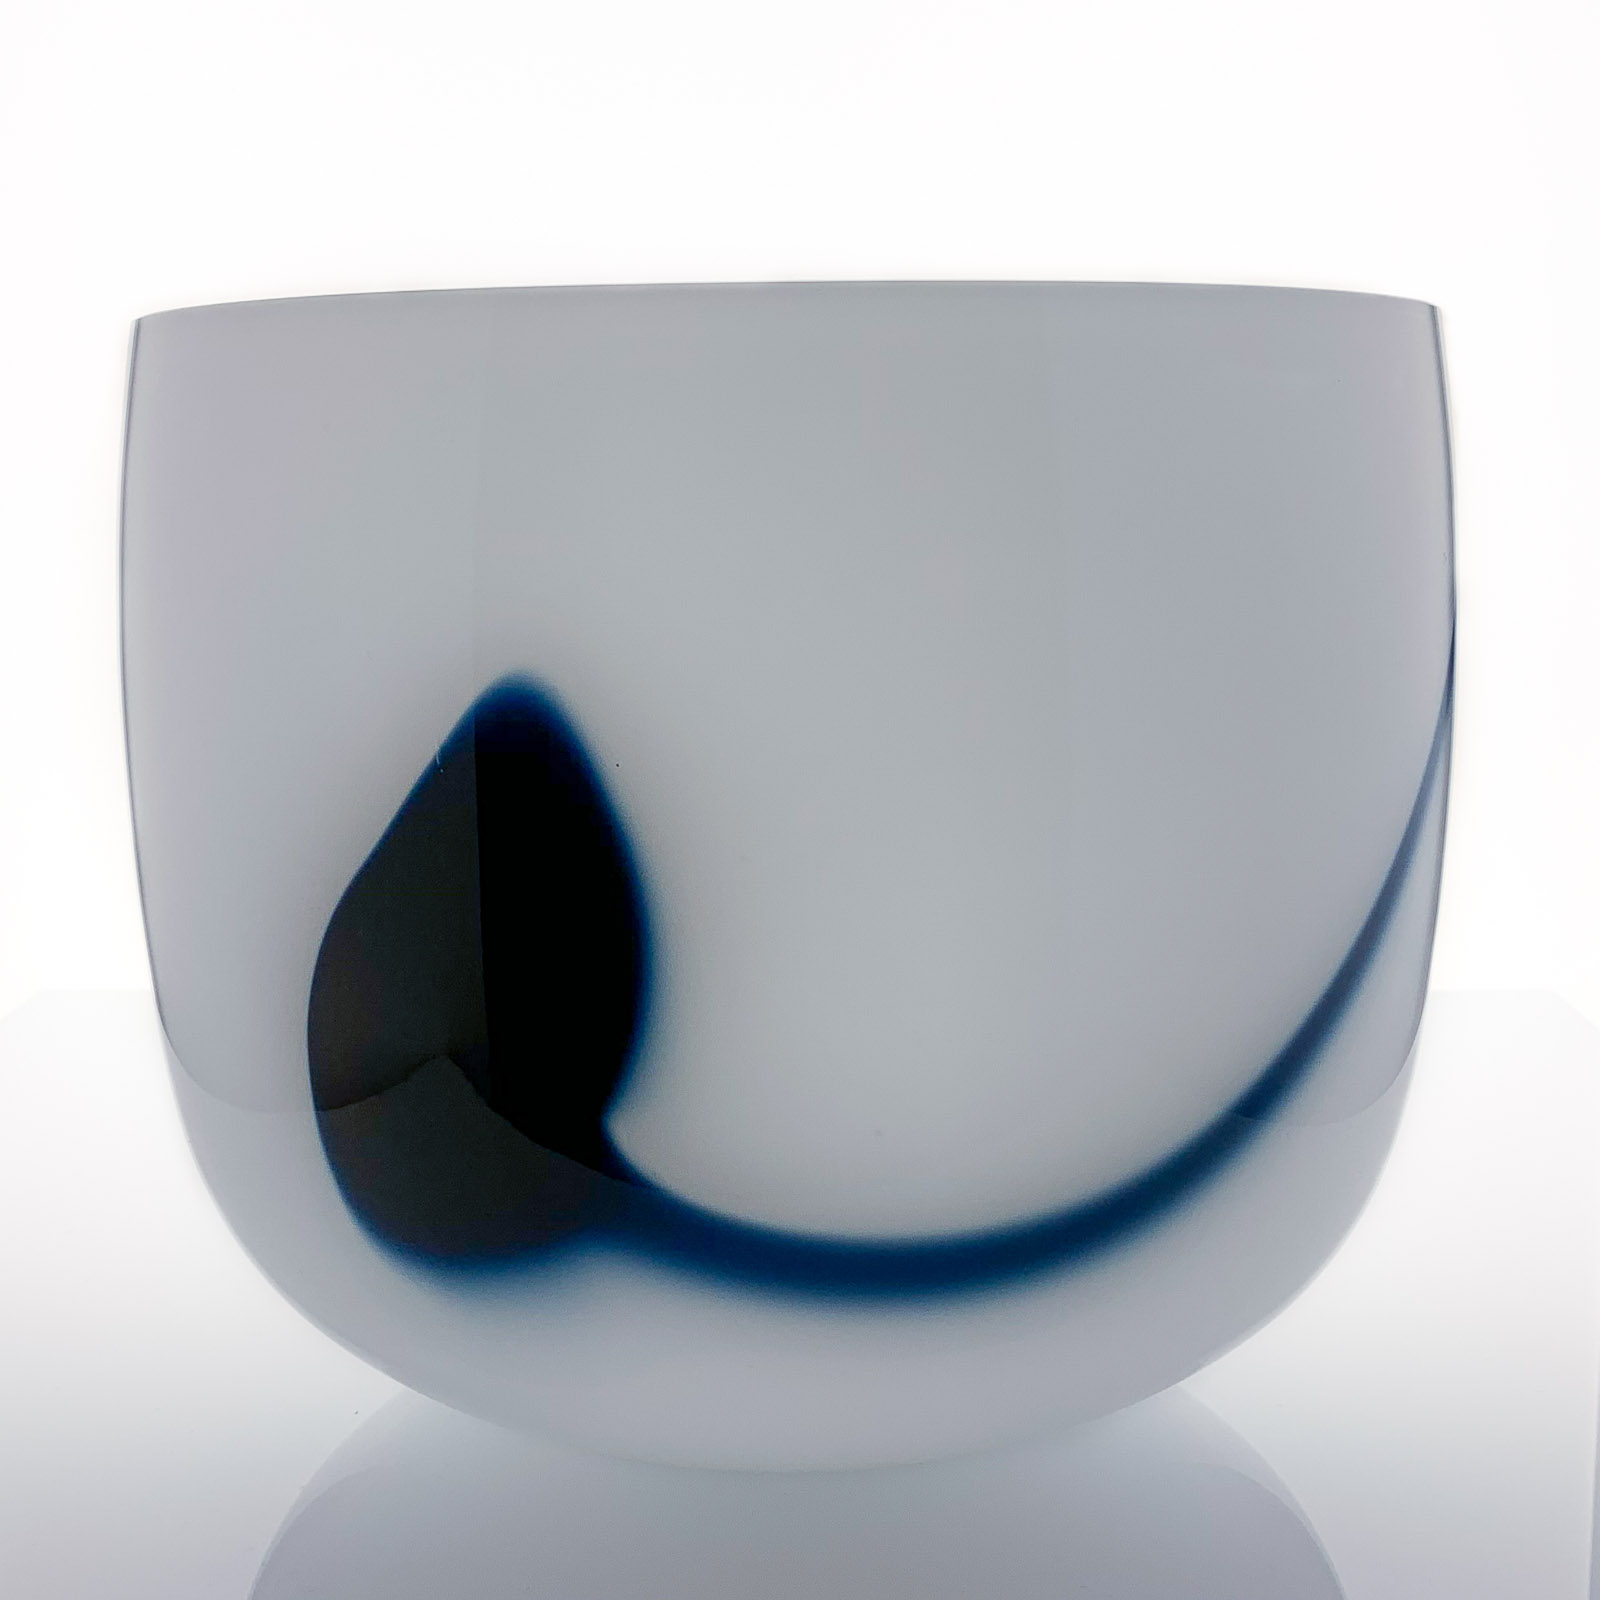 Timo Sarpaneva - glass art-object "Blues" - Iittala, Finland 1985